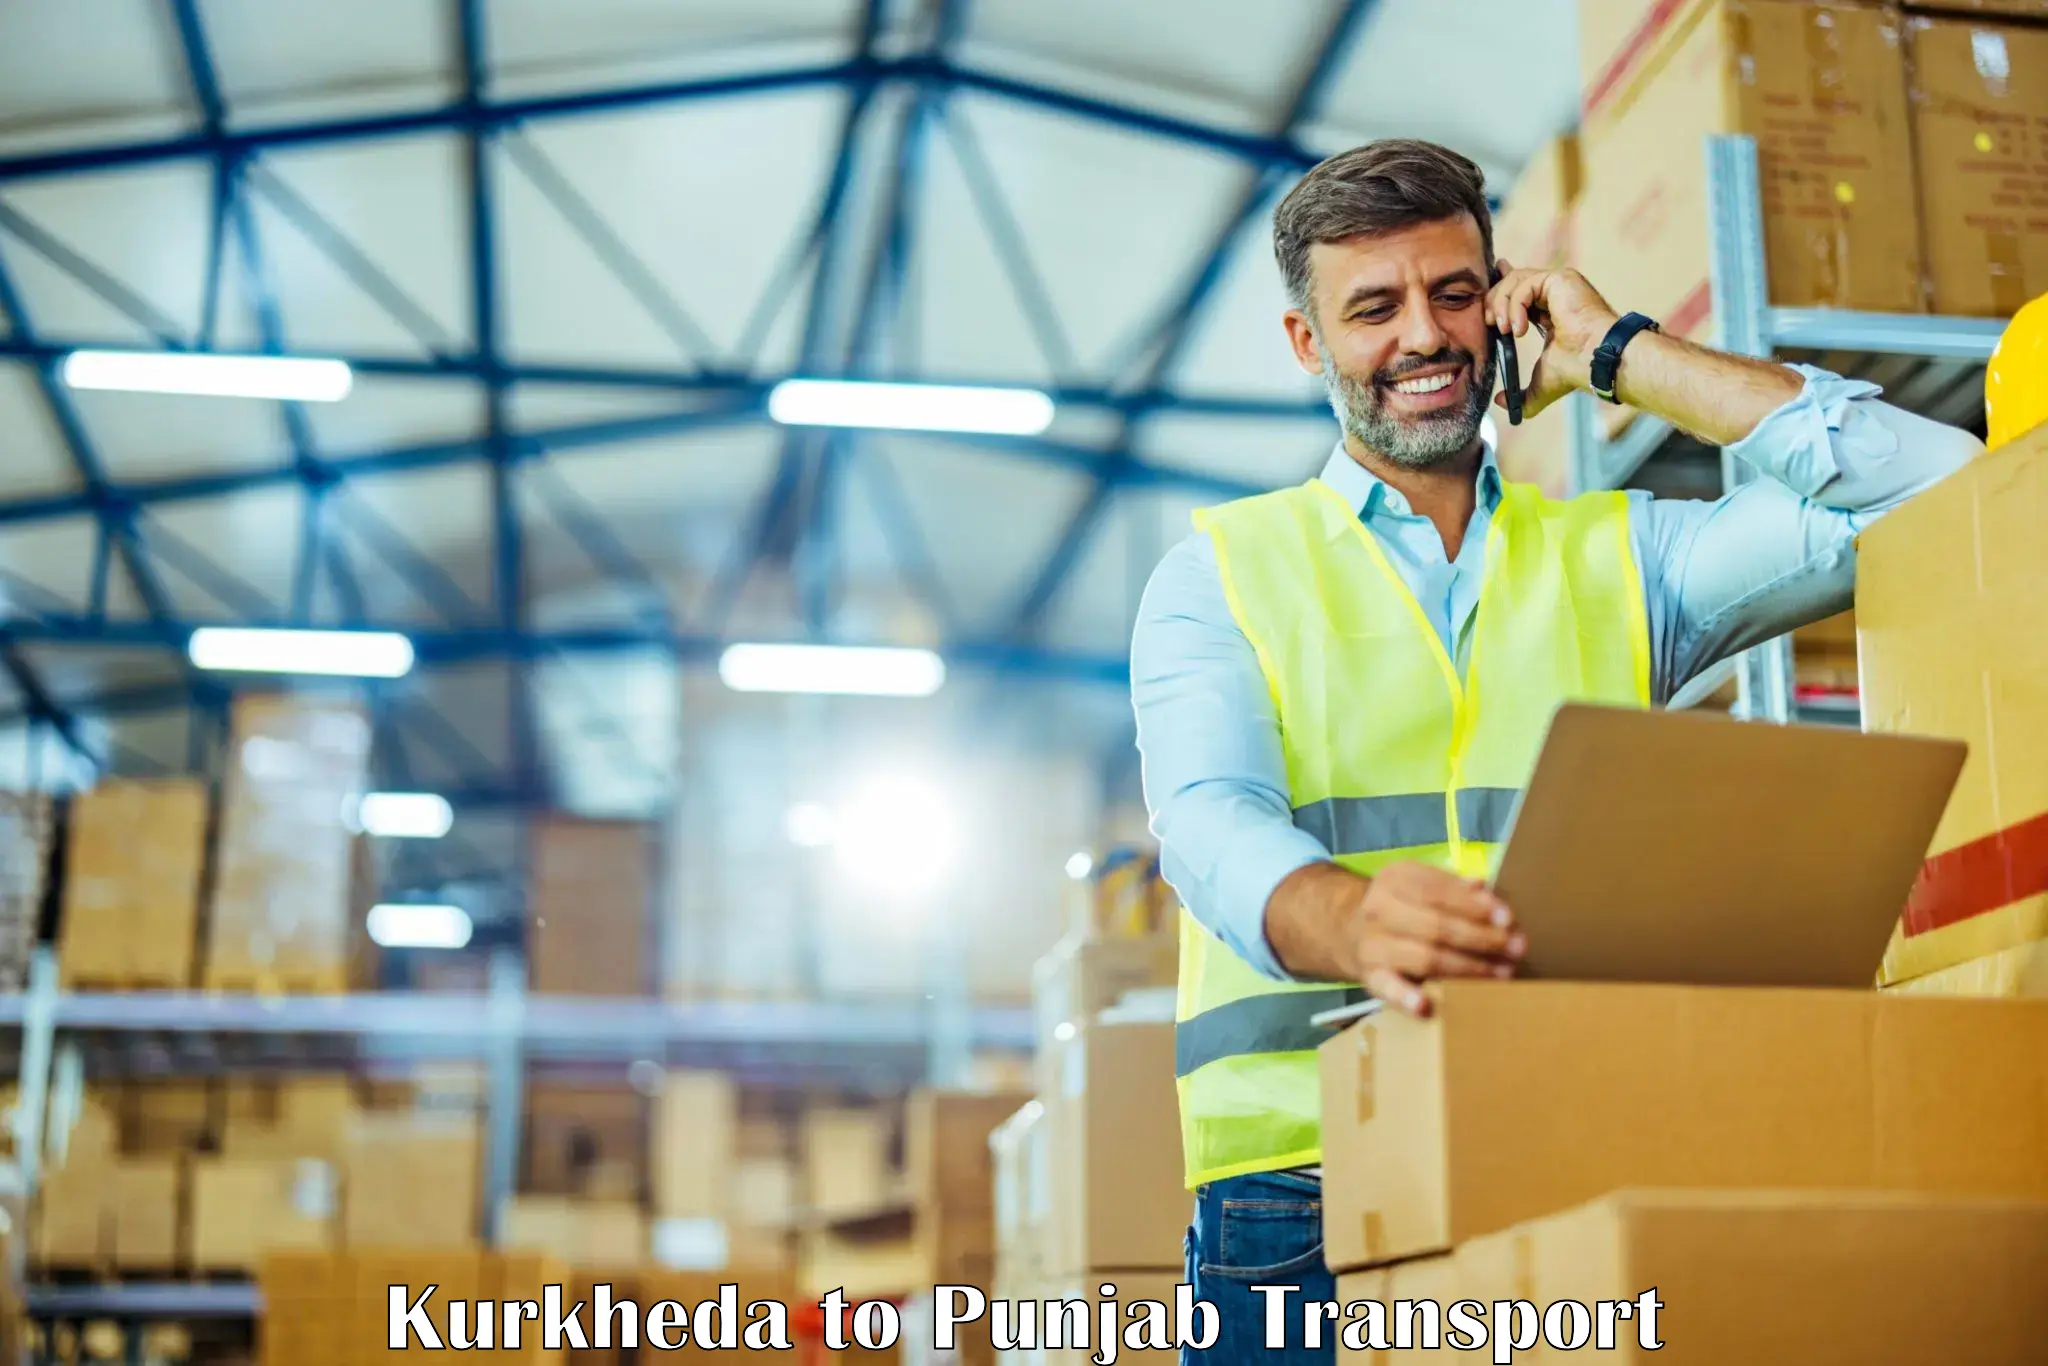 Truck transport companies in India Kurkheda to Amritsar